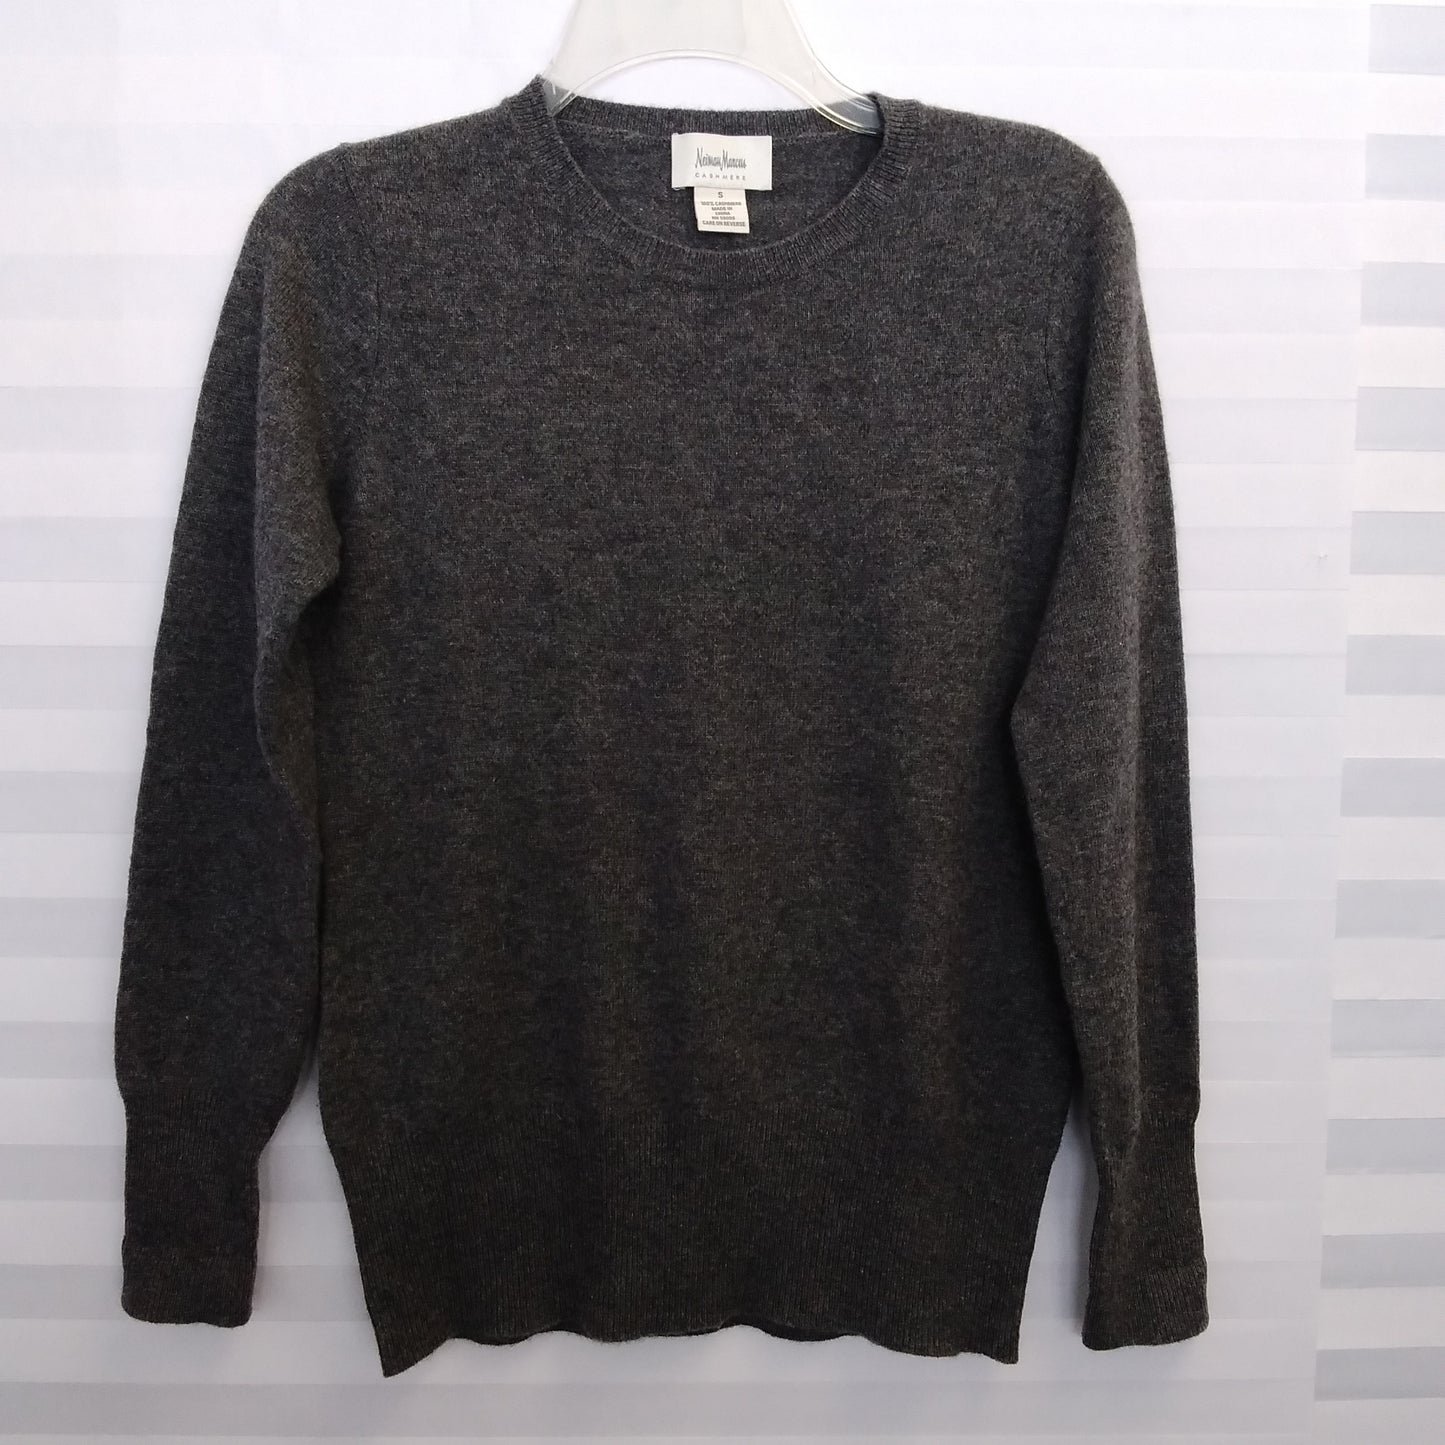 Neiman Marcus Cashmere Gray Cashmere Sweater - S